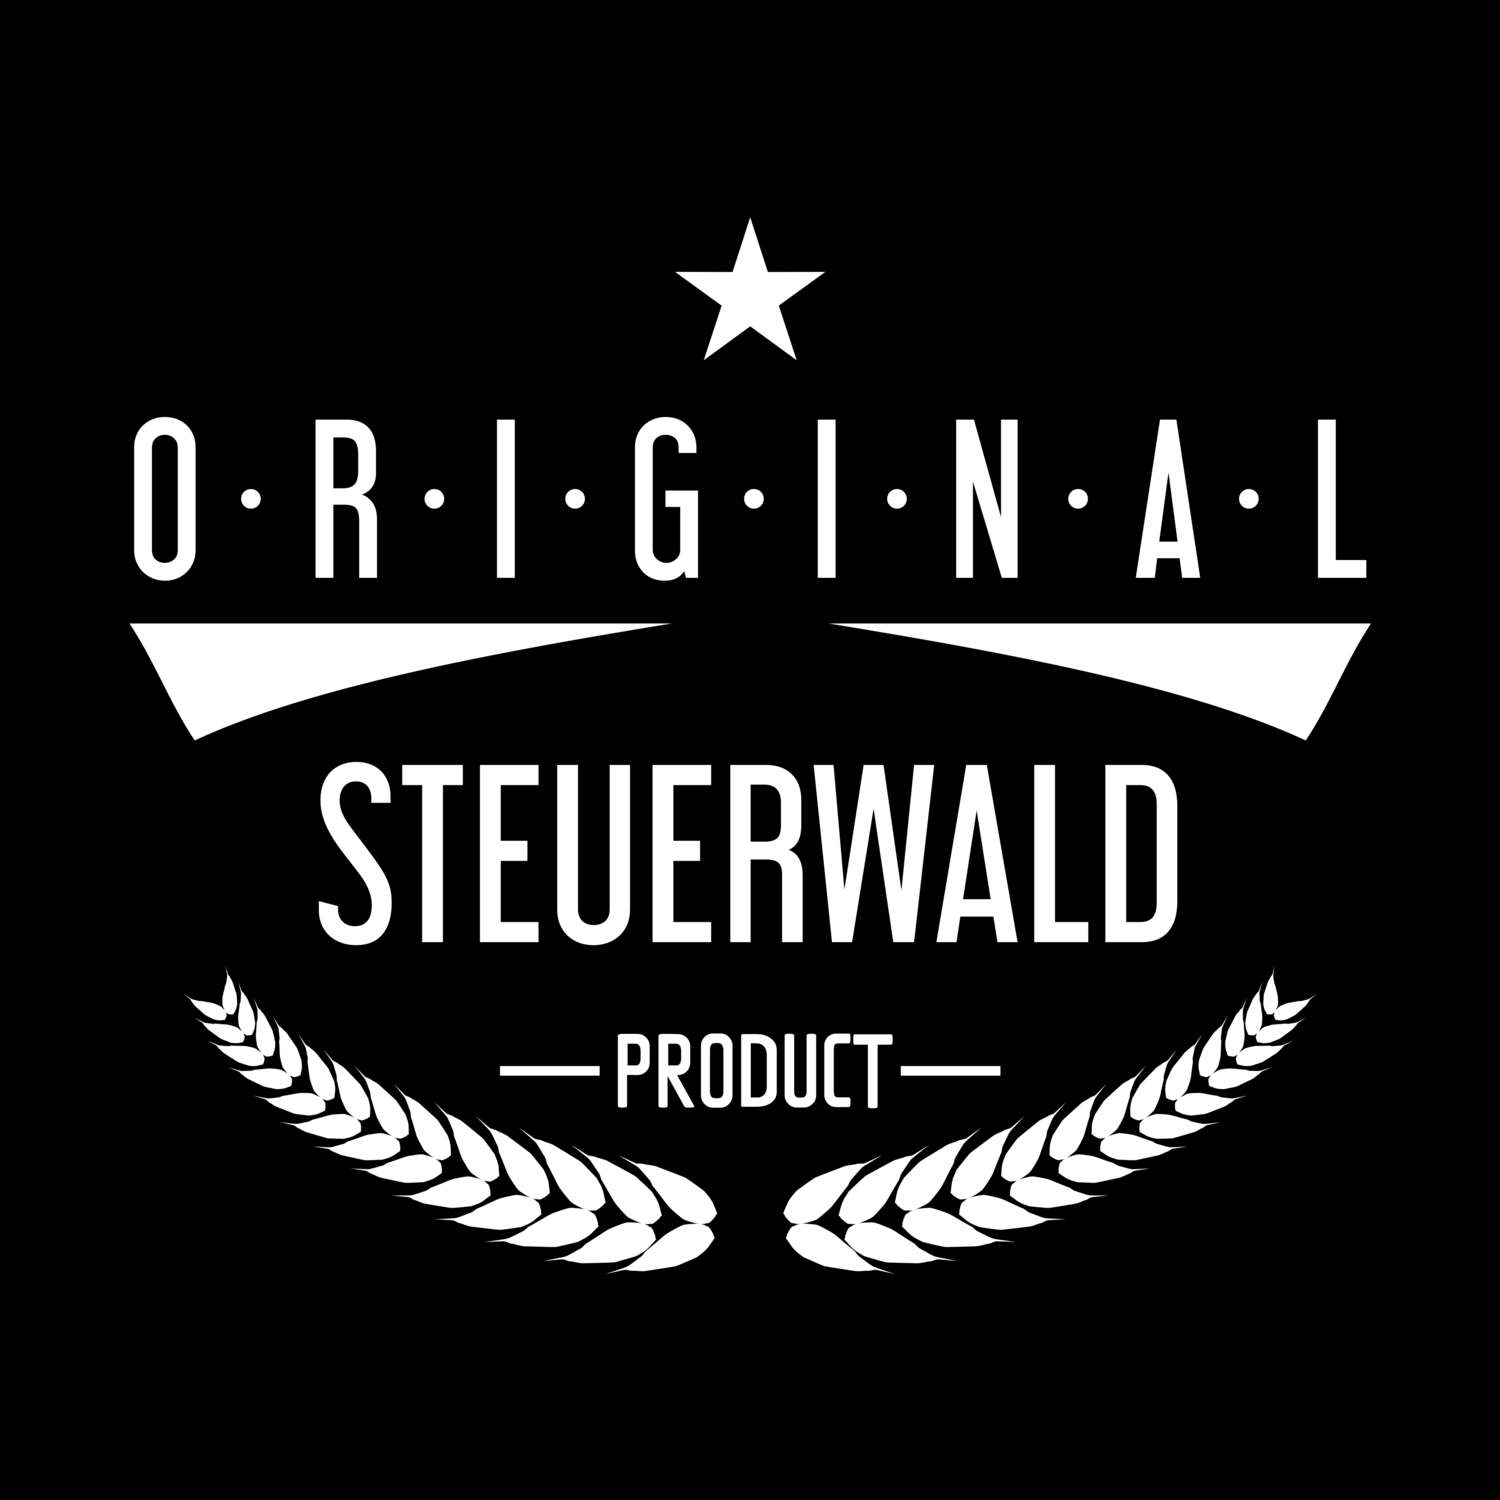 Steuerwald T-Shirt »Original Product«